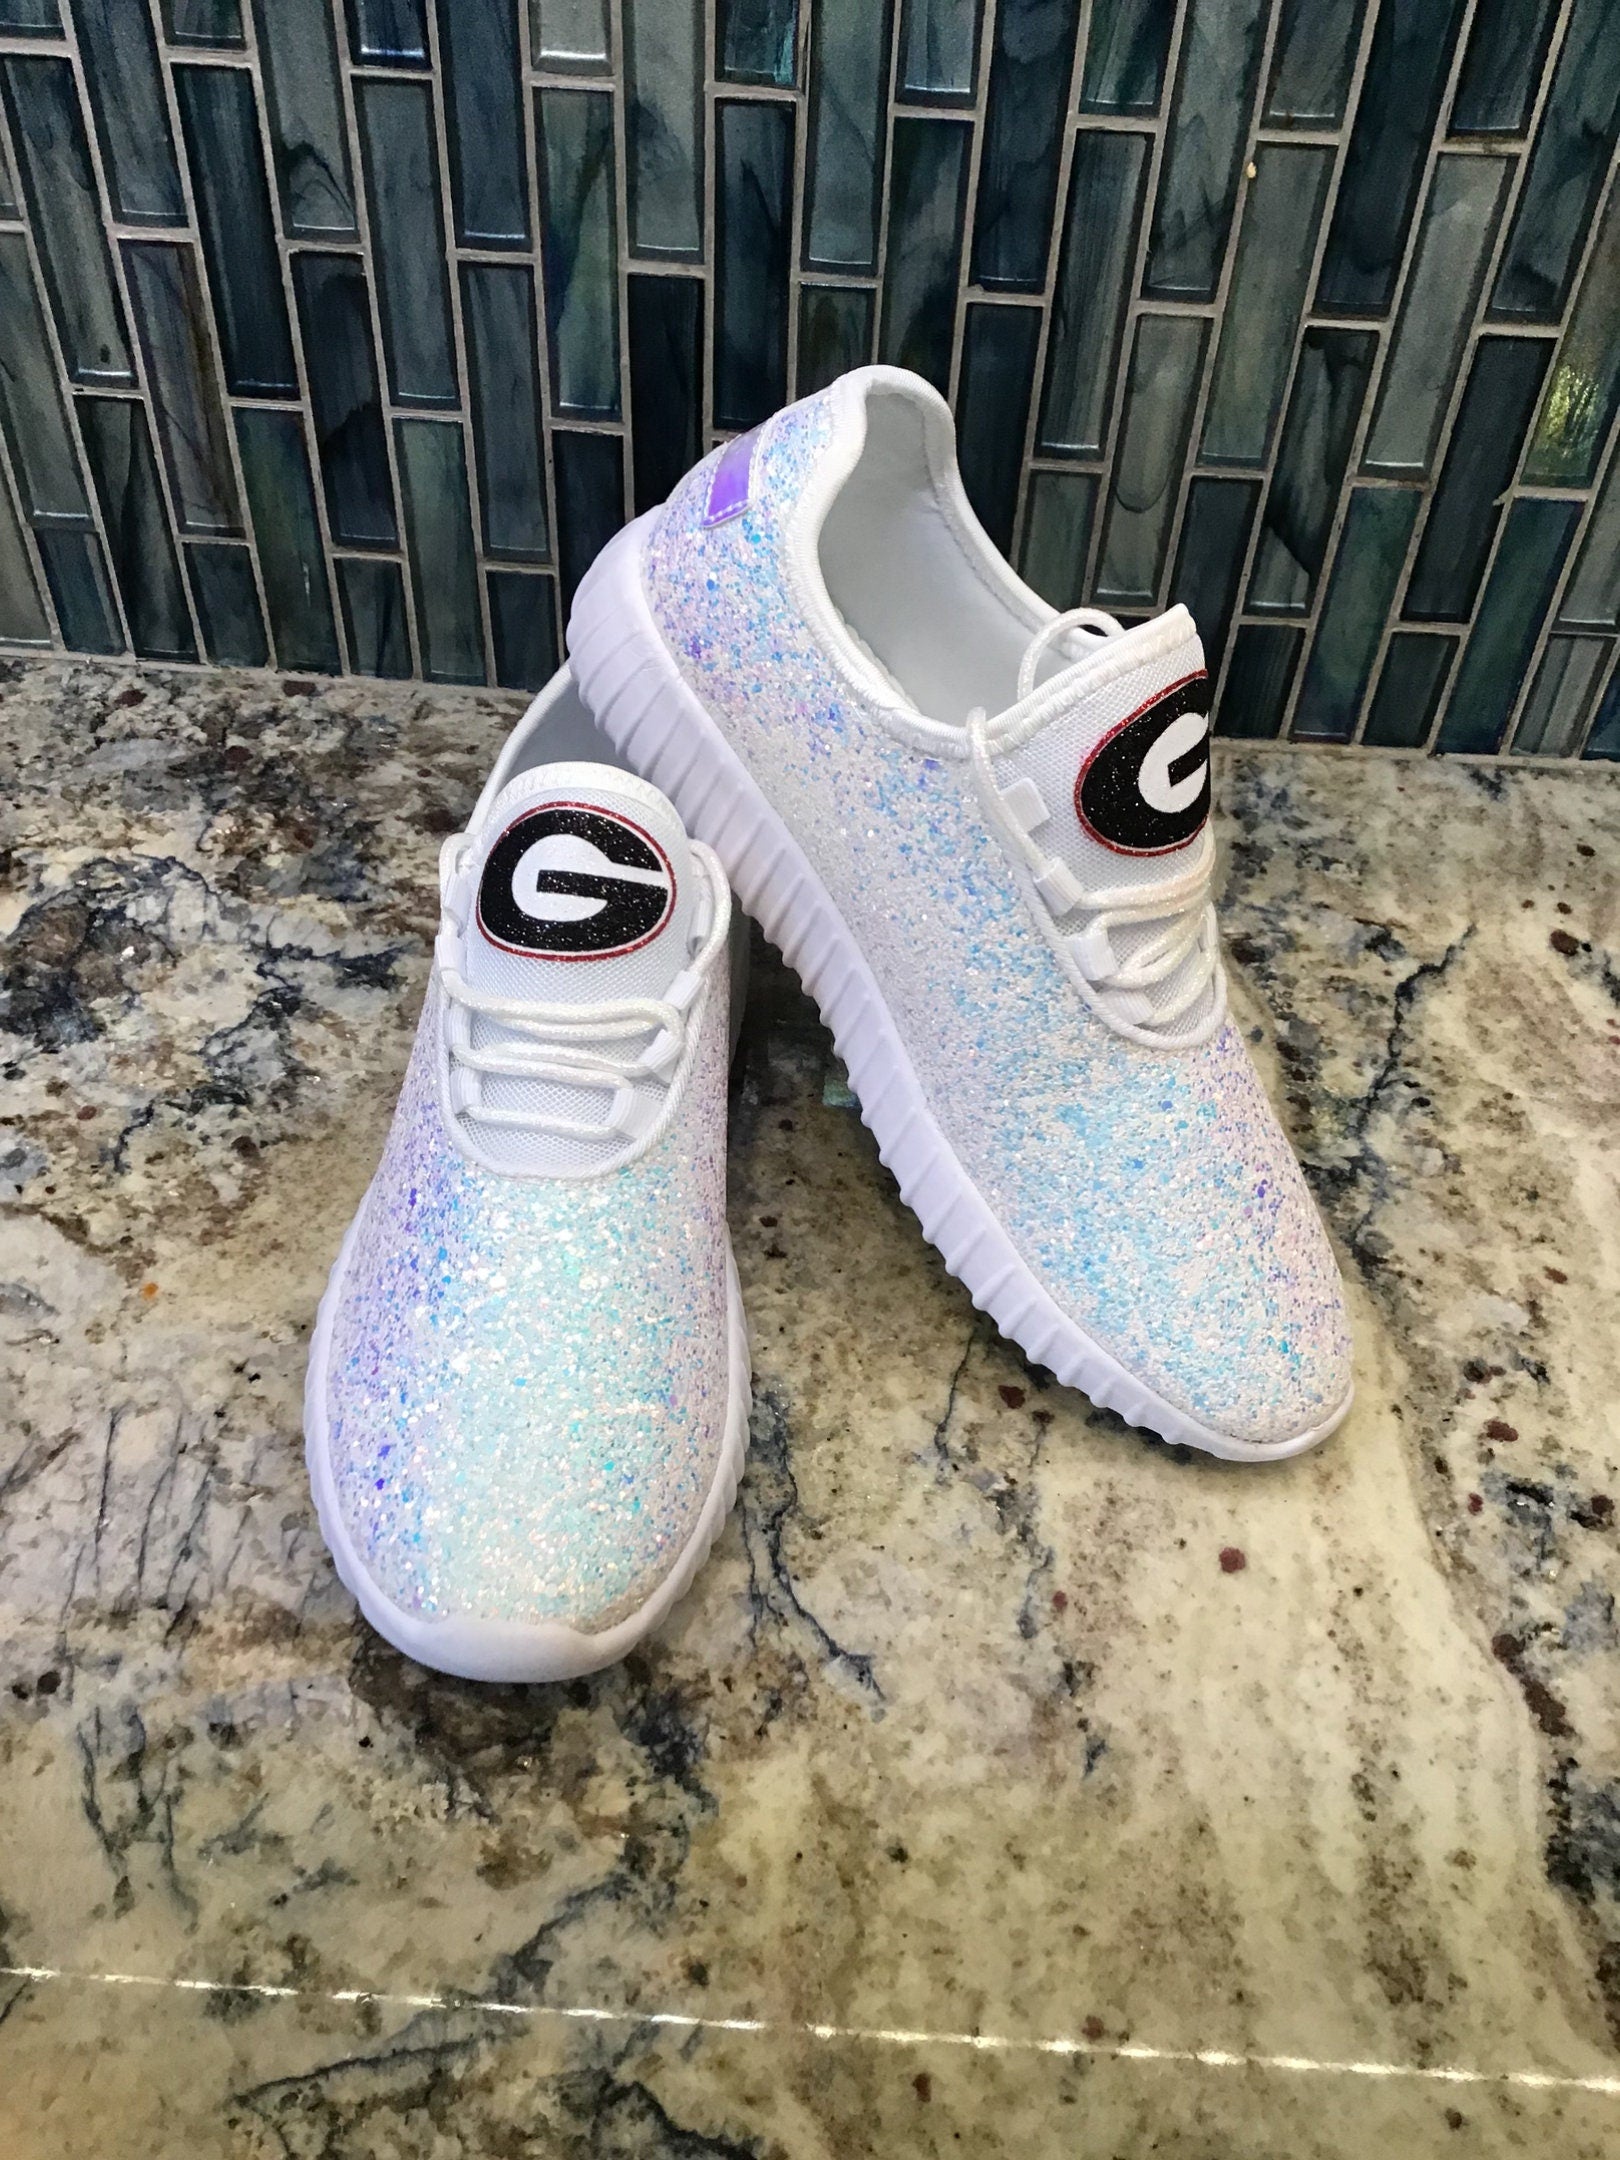 Rhinestone Embellished Georgia Bulldogs Low Top Sneakers: College Football Fashion Sneakers for Women 7